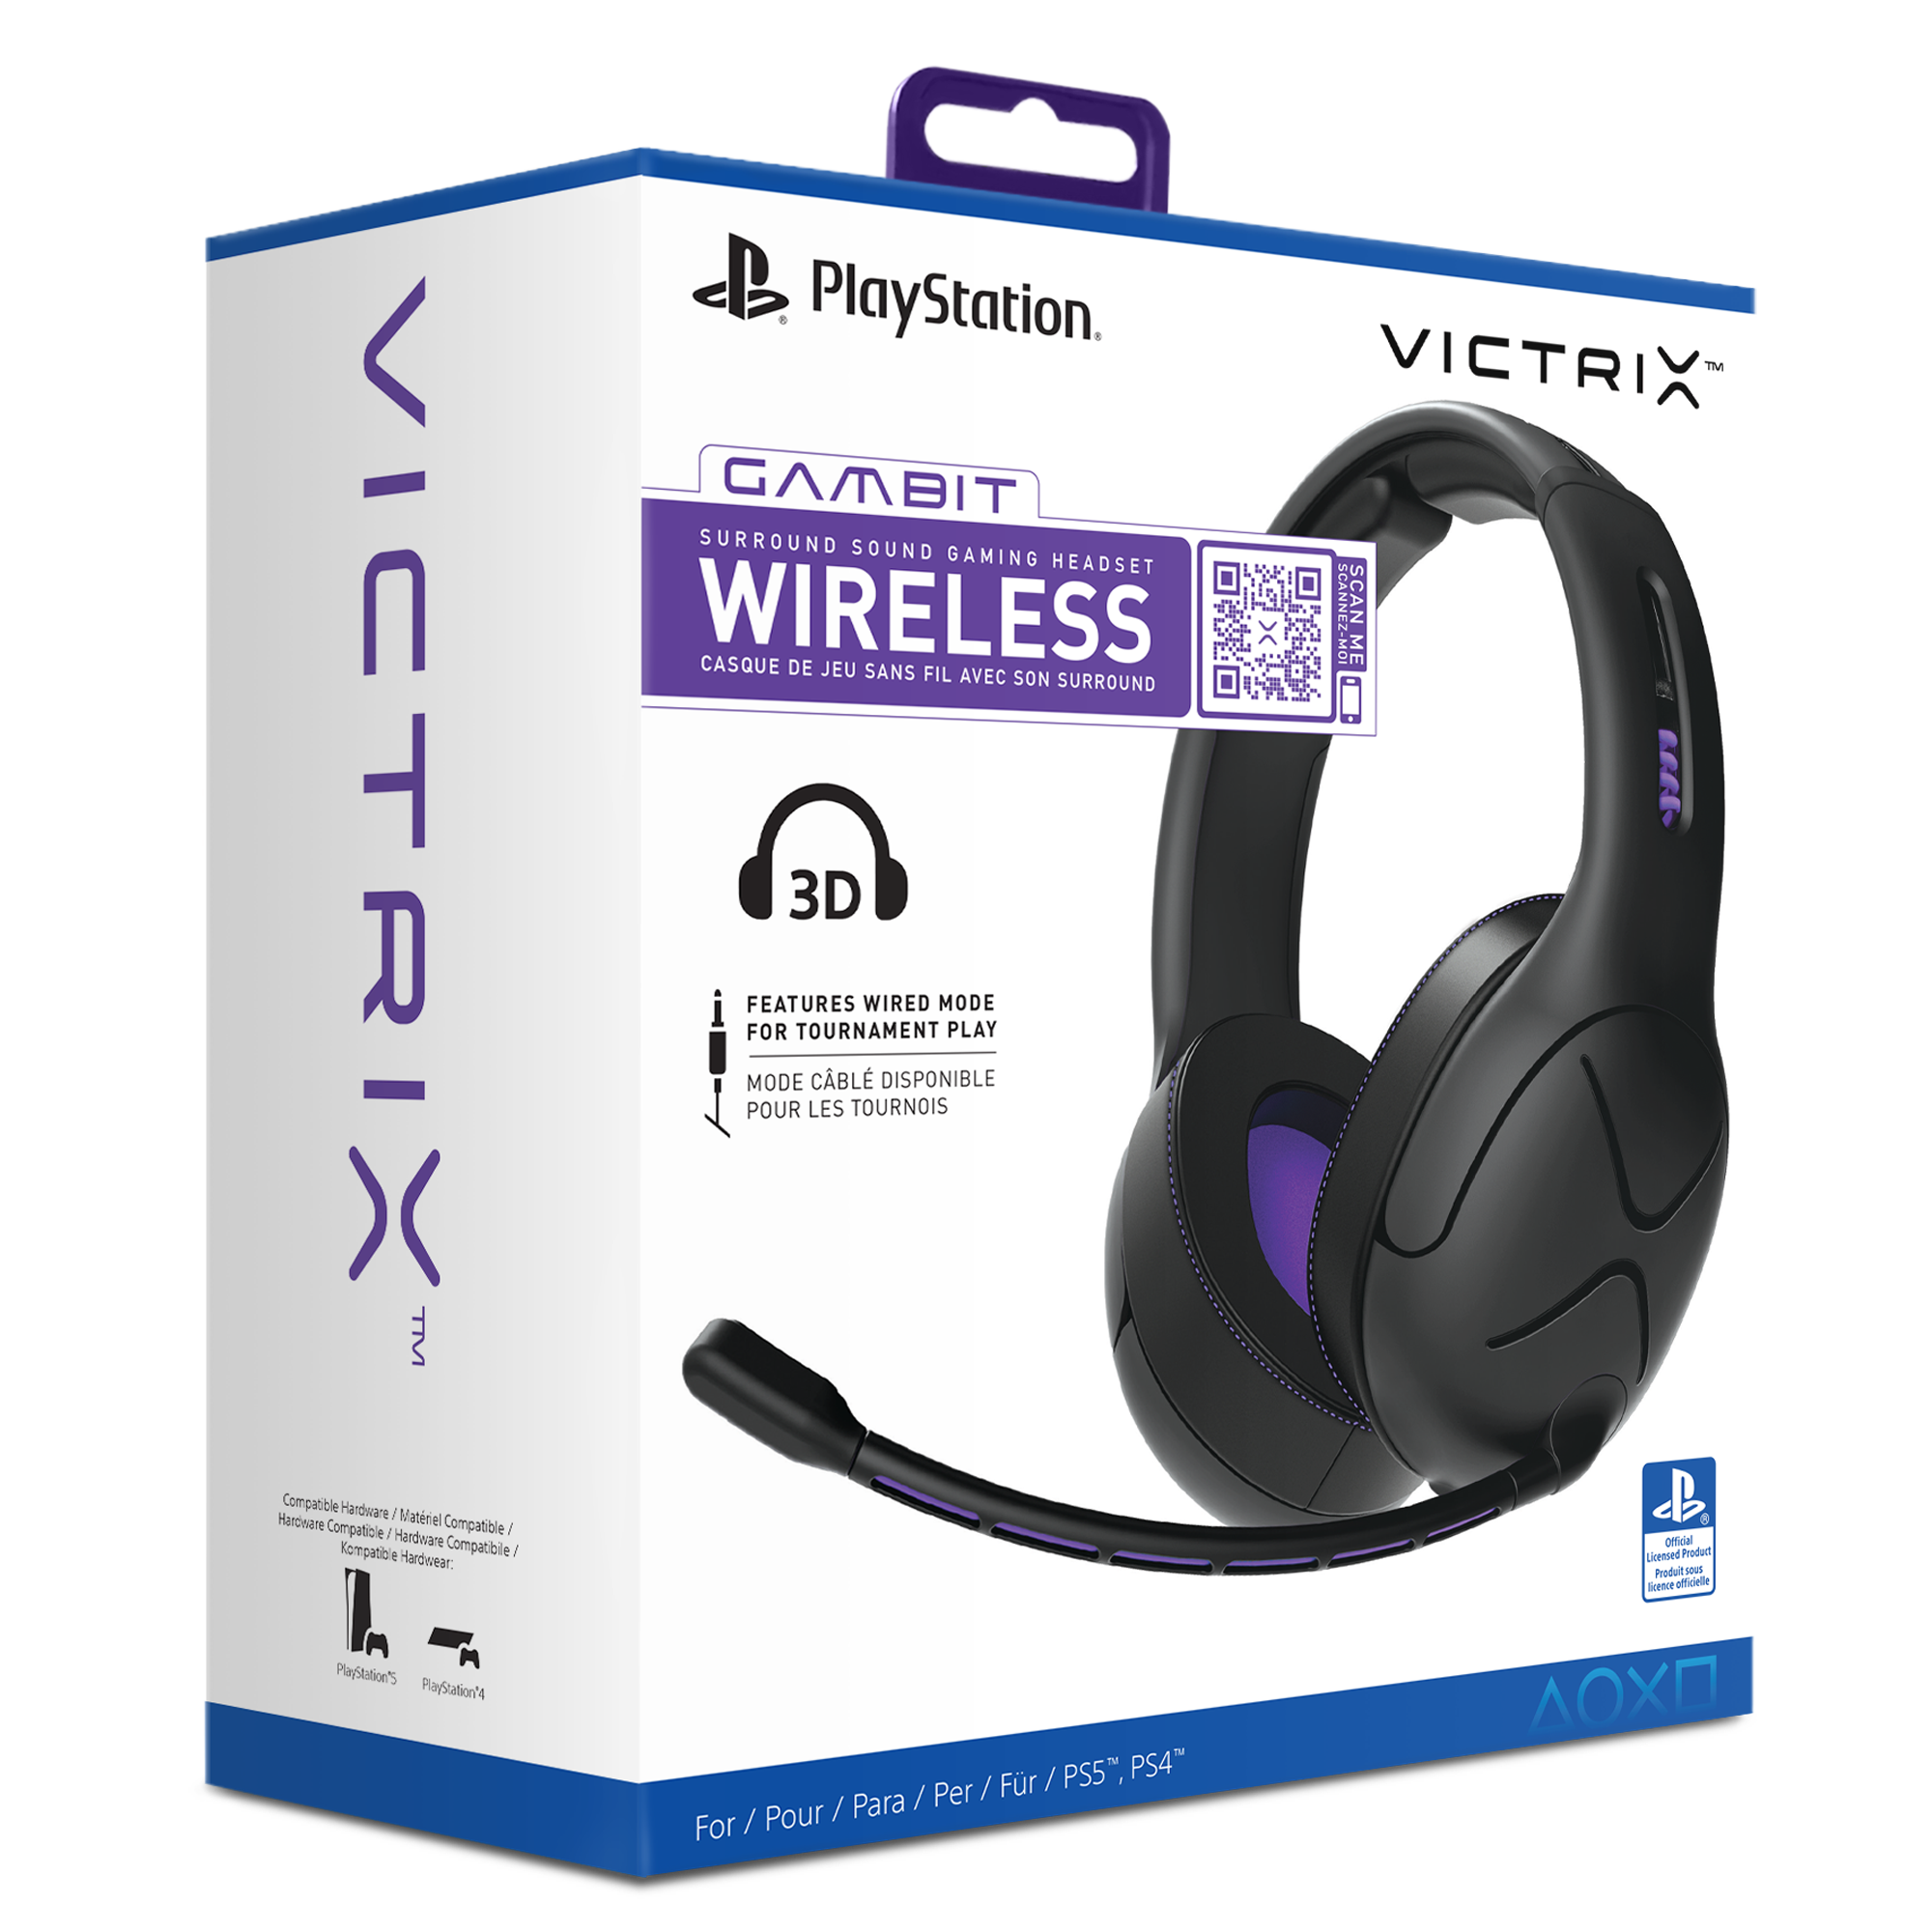 PS5 & PC Victrix Gambit Wireless Headset